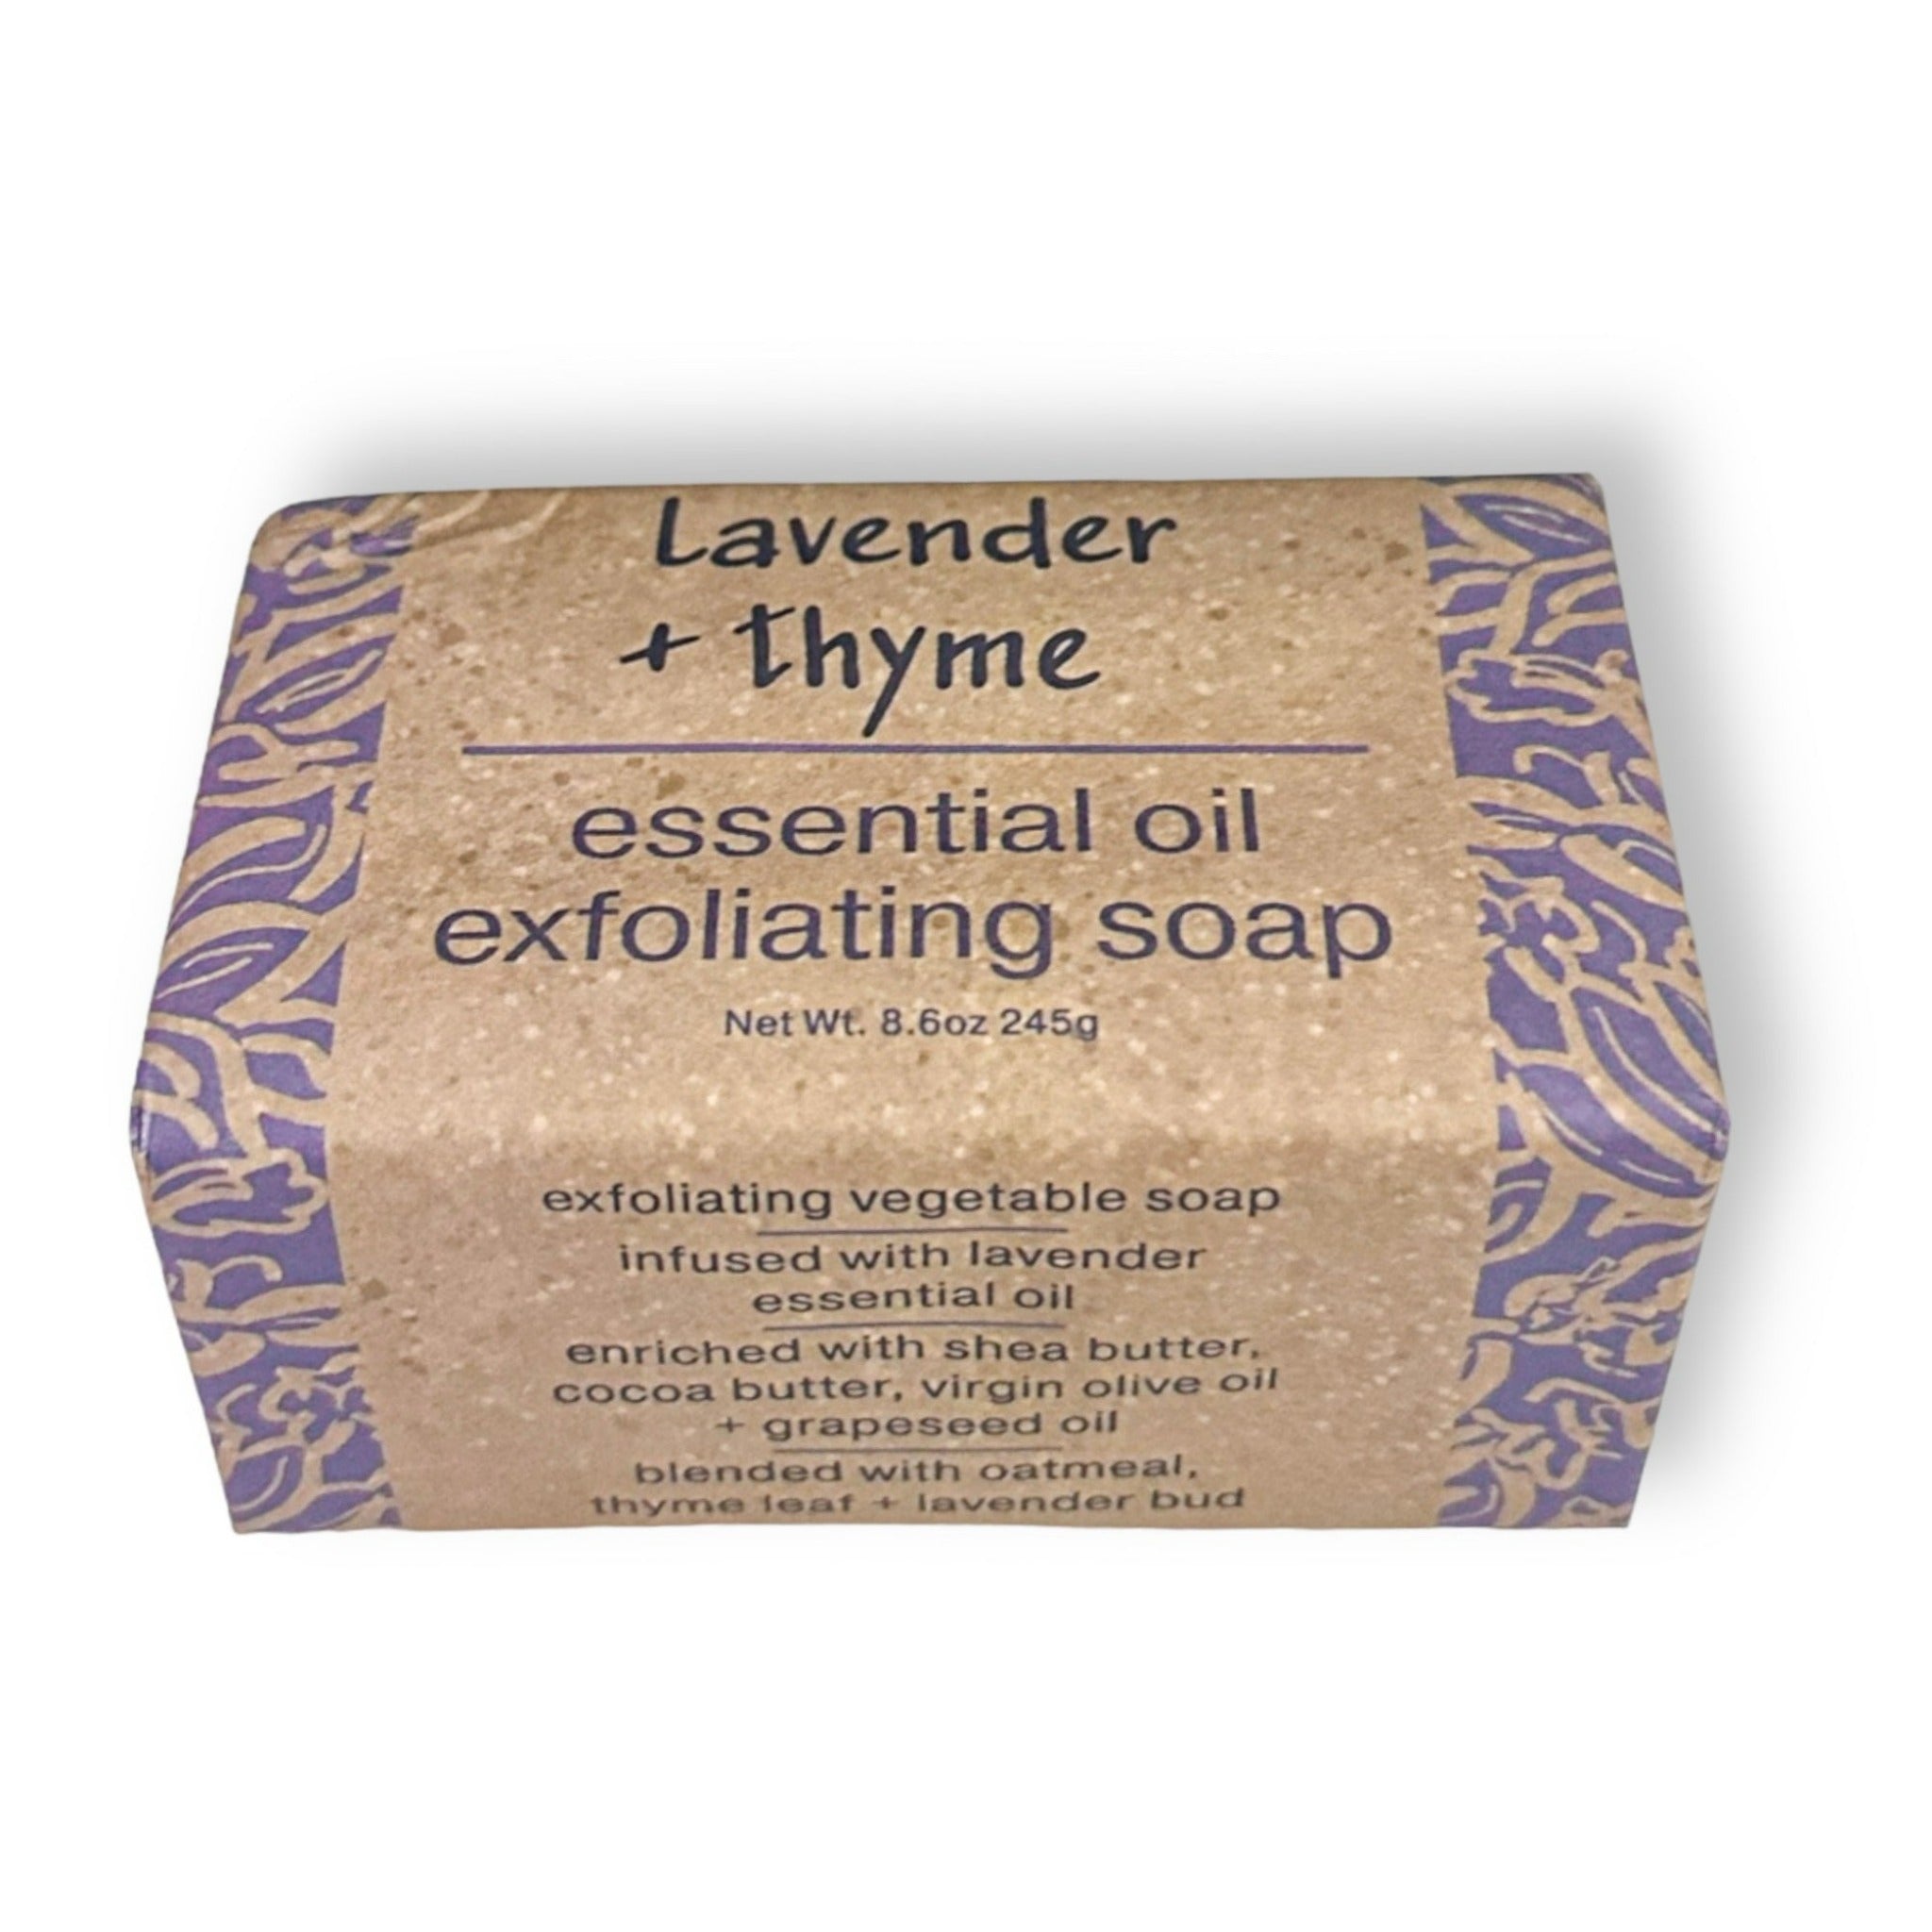 Greenwich Bay Trading Company Lavender Thyme Essential Oil Exfoliating Soap 8.6 oz